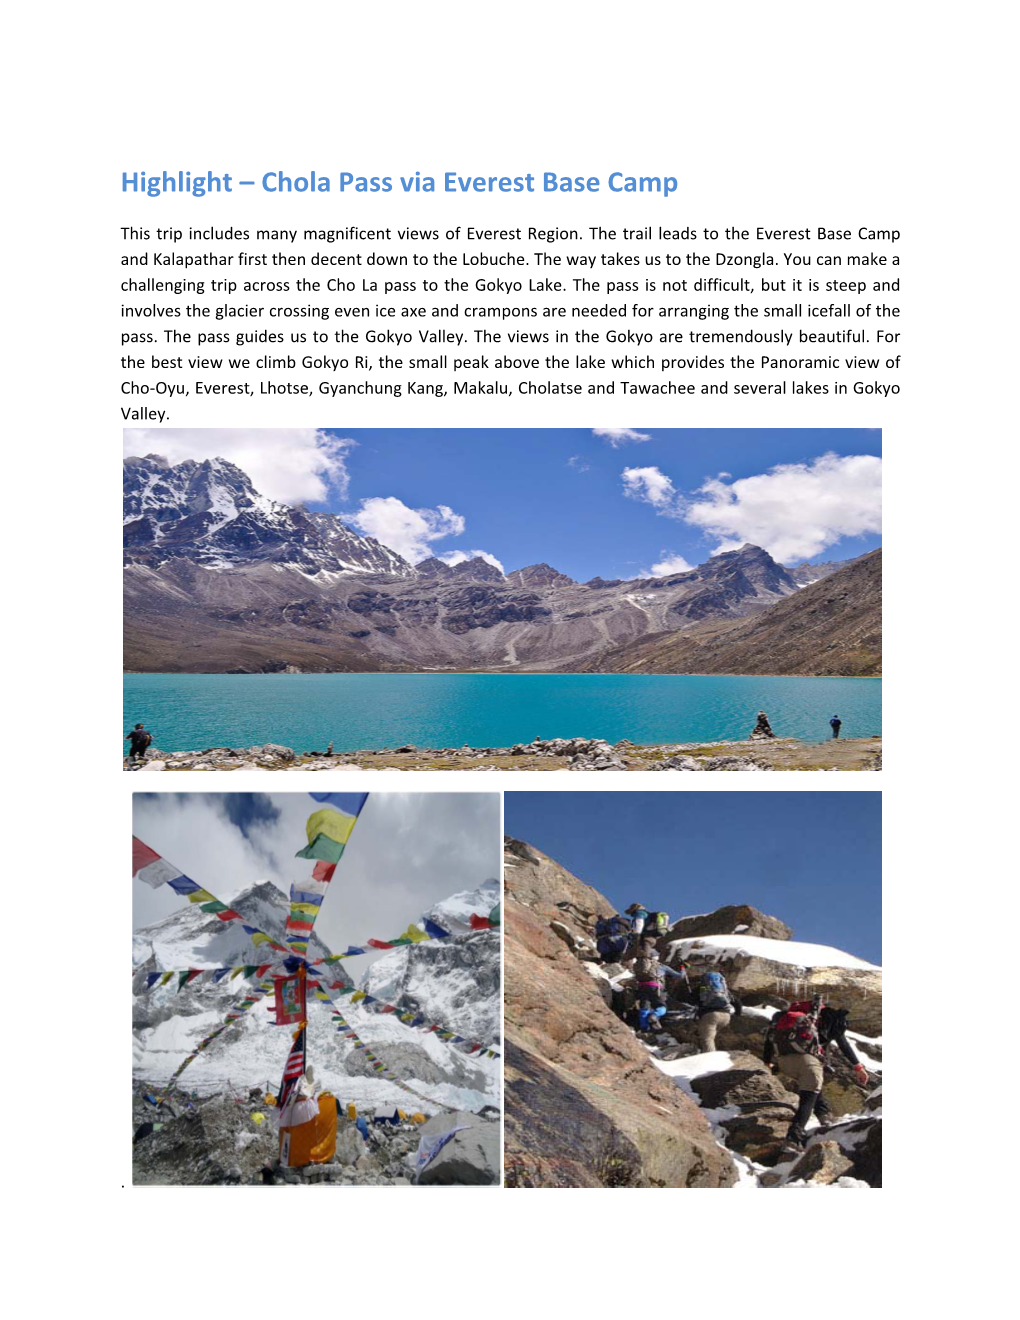 Chola Pass Via Everest Base Camp